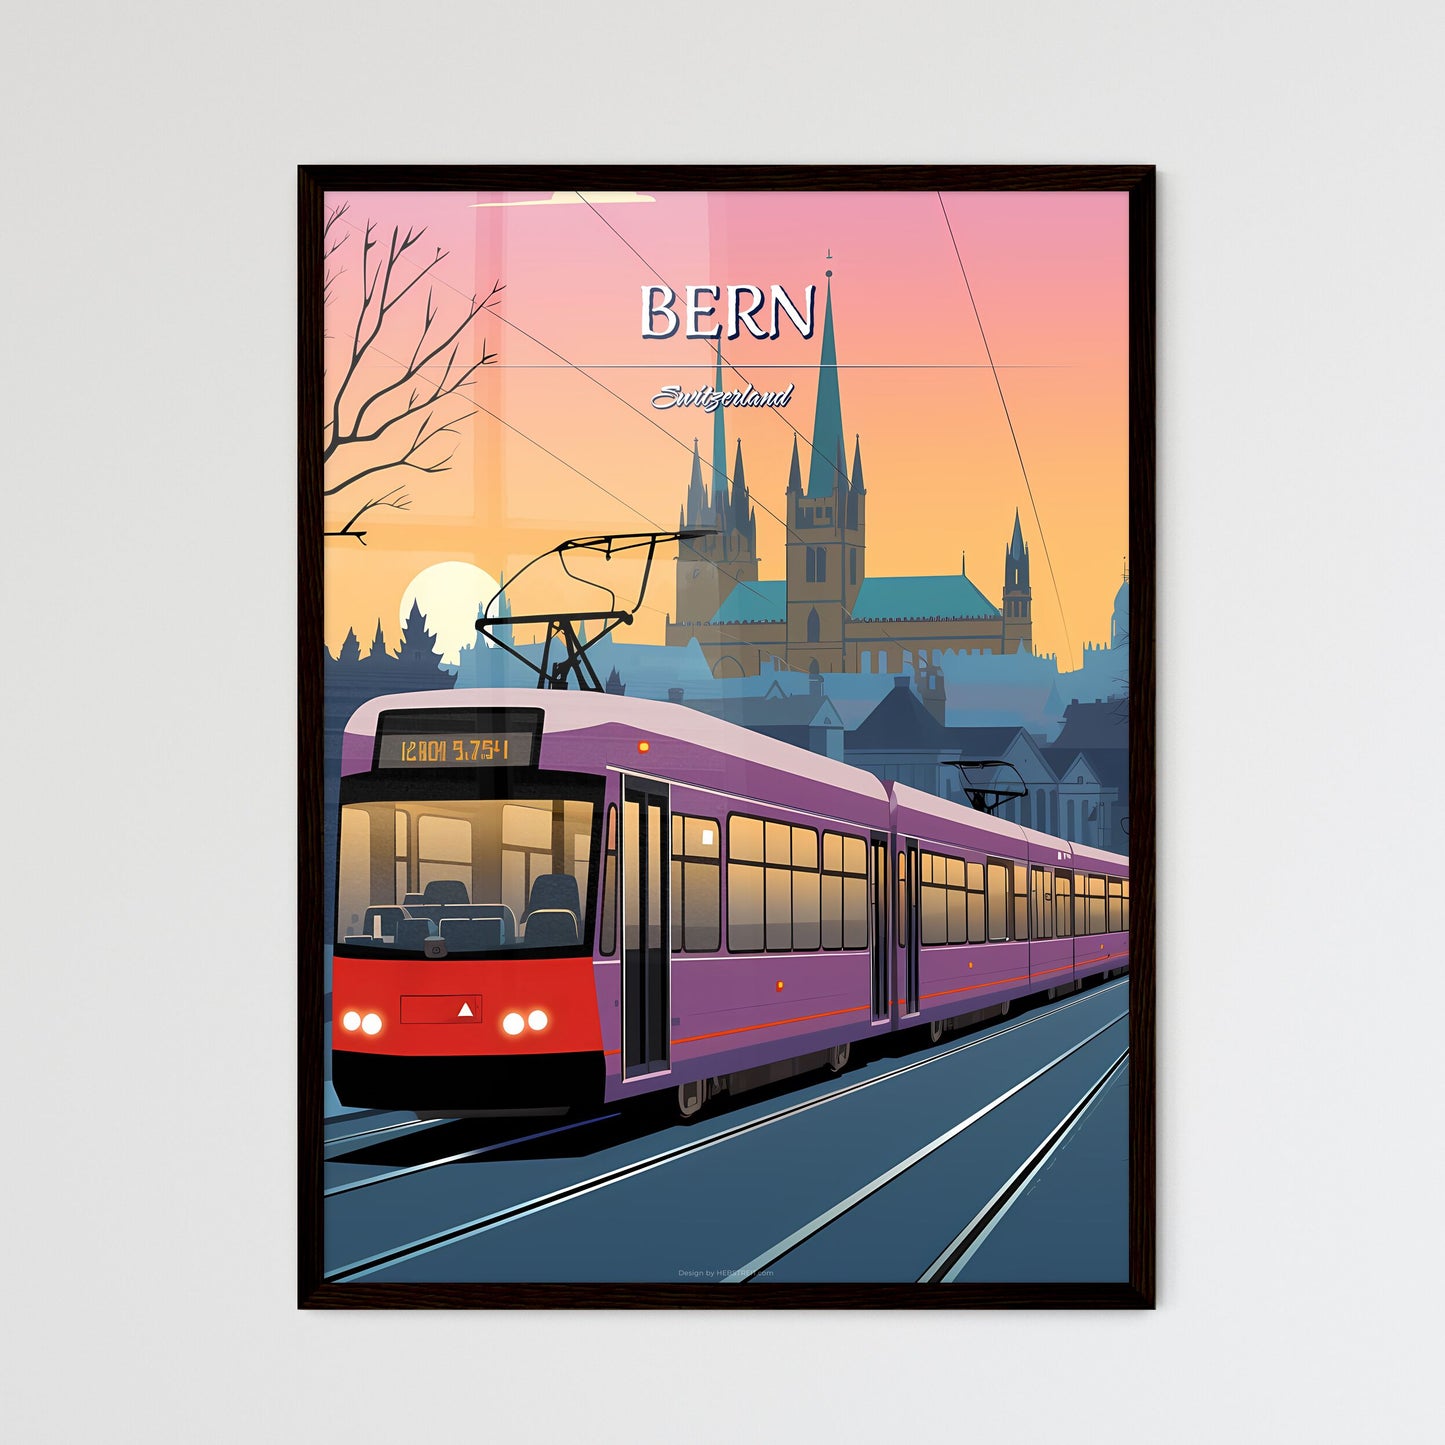 Bern, Switzerland - Art print of a train on the tracks Default Title